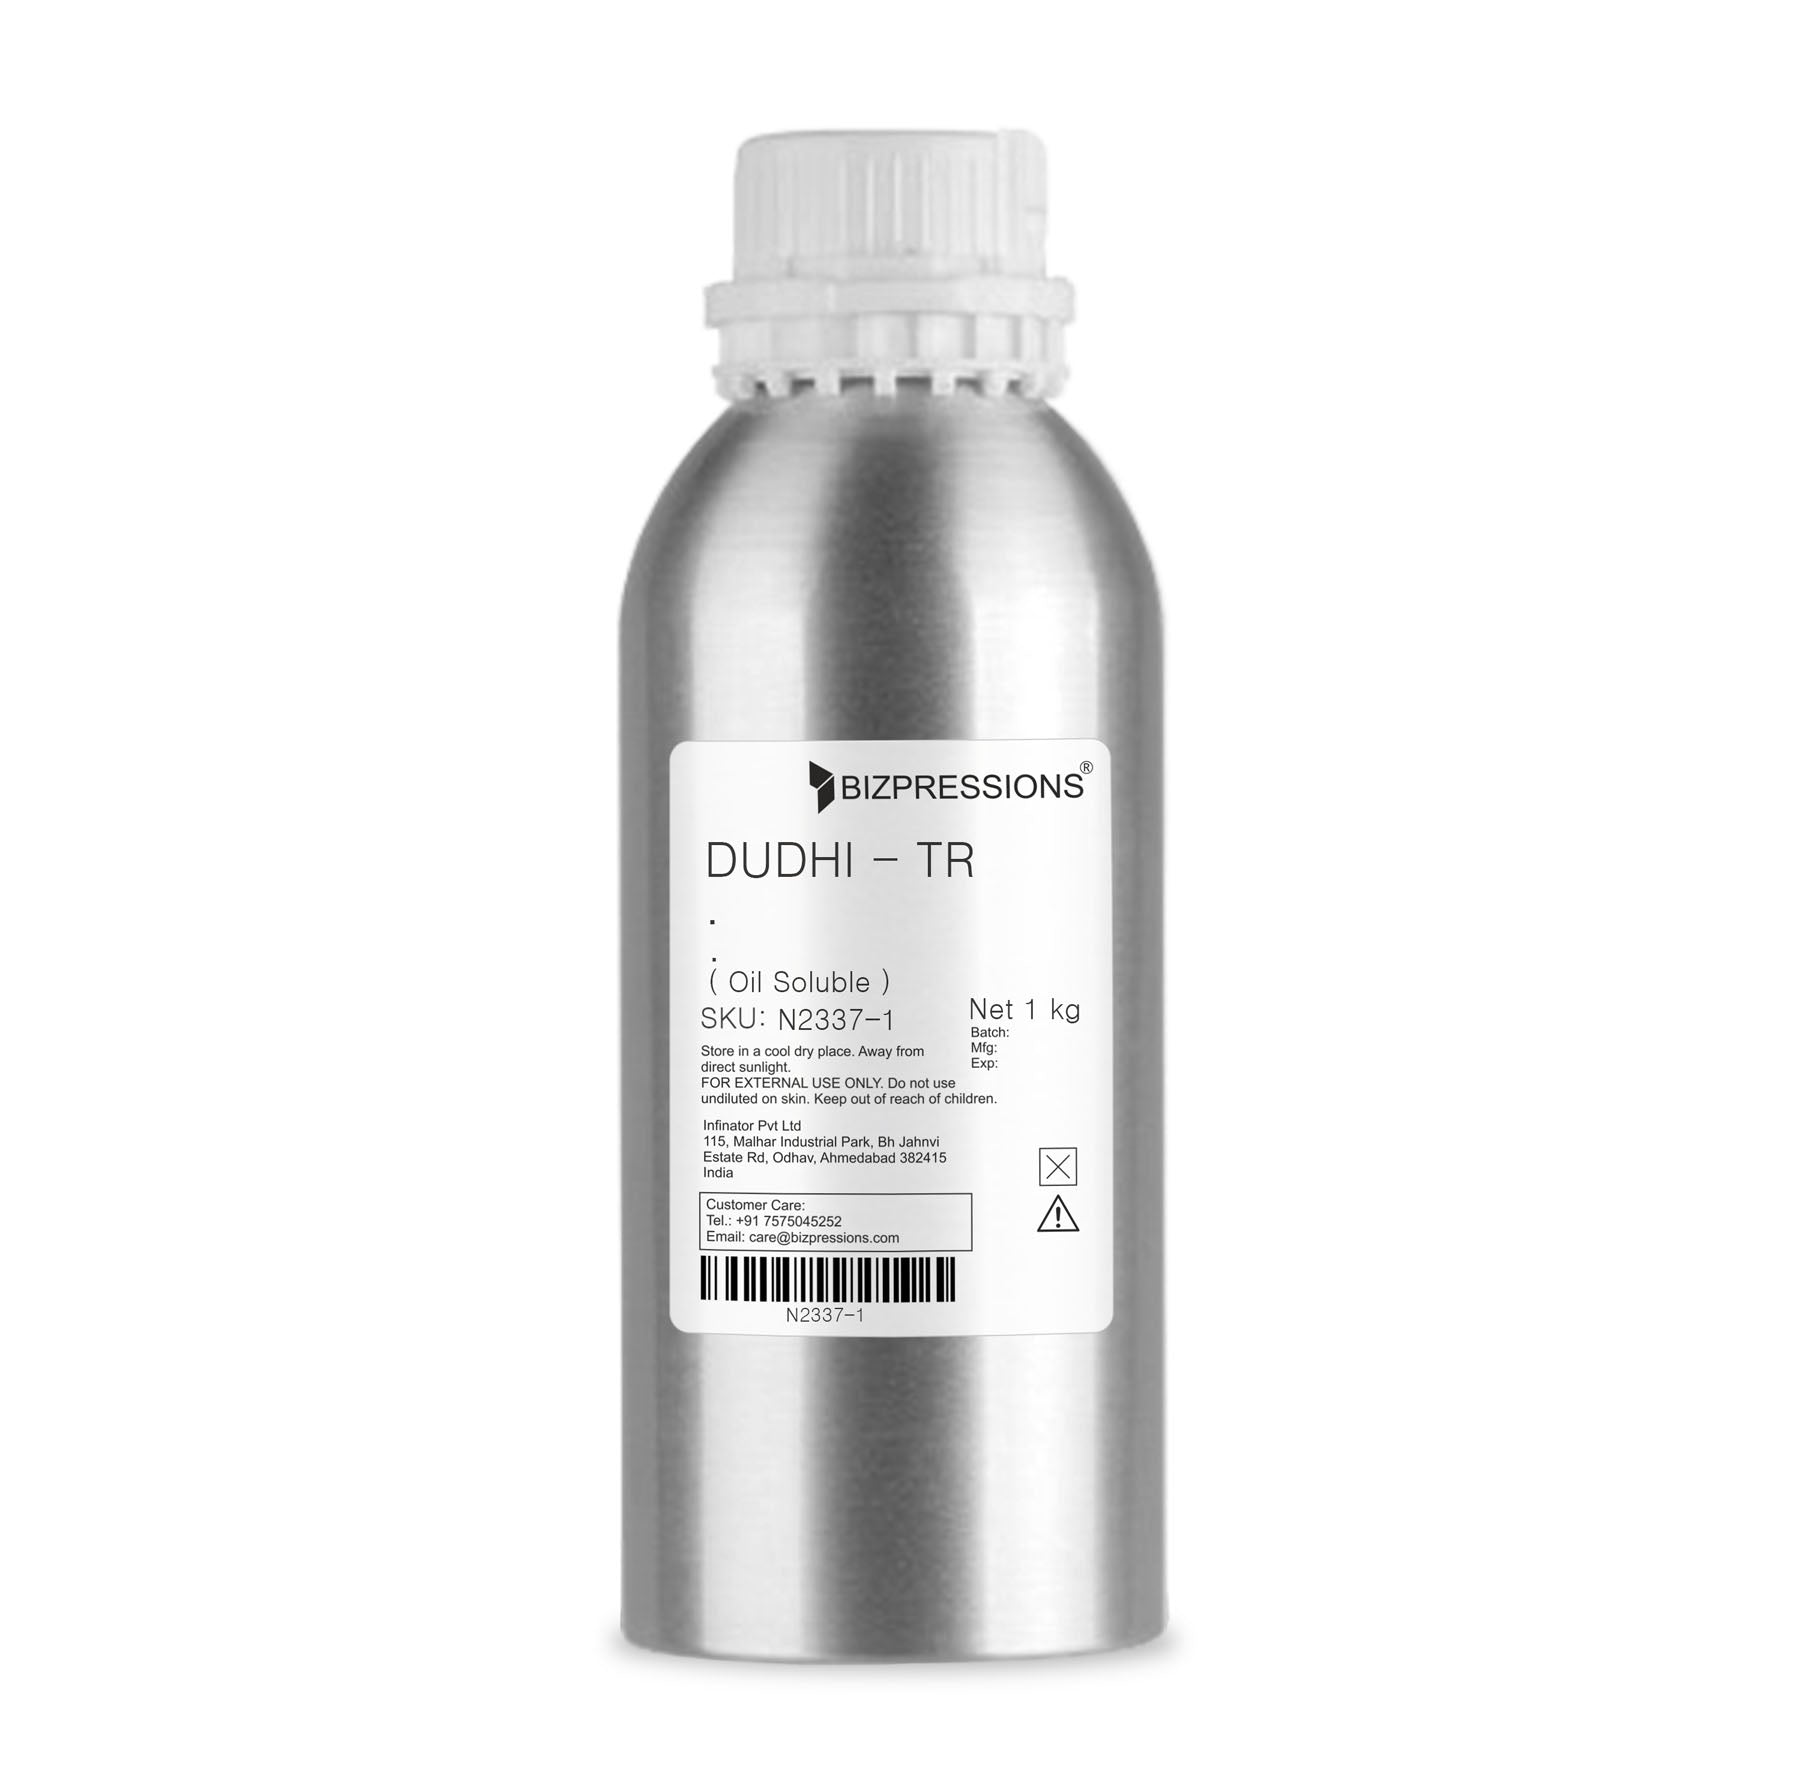 DUDHI - TR - Fragrance ( Oil Soluble ) - 1 kg